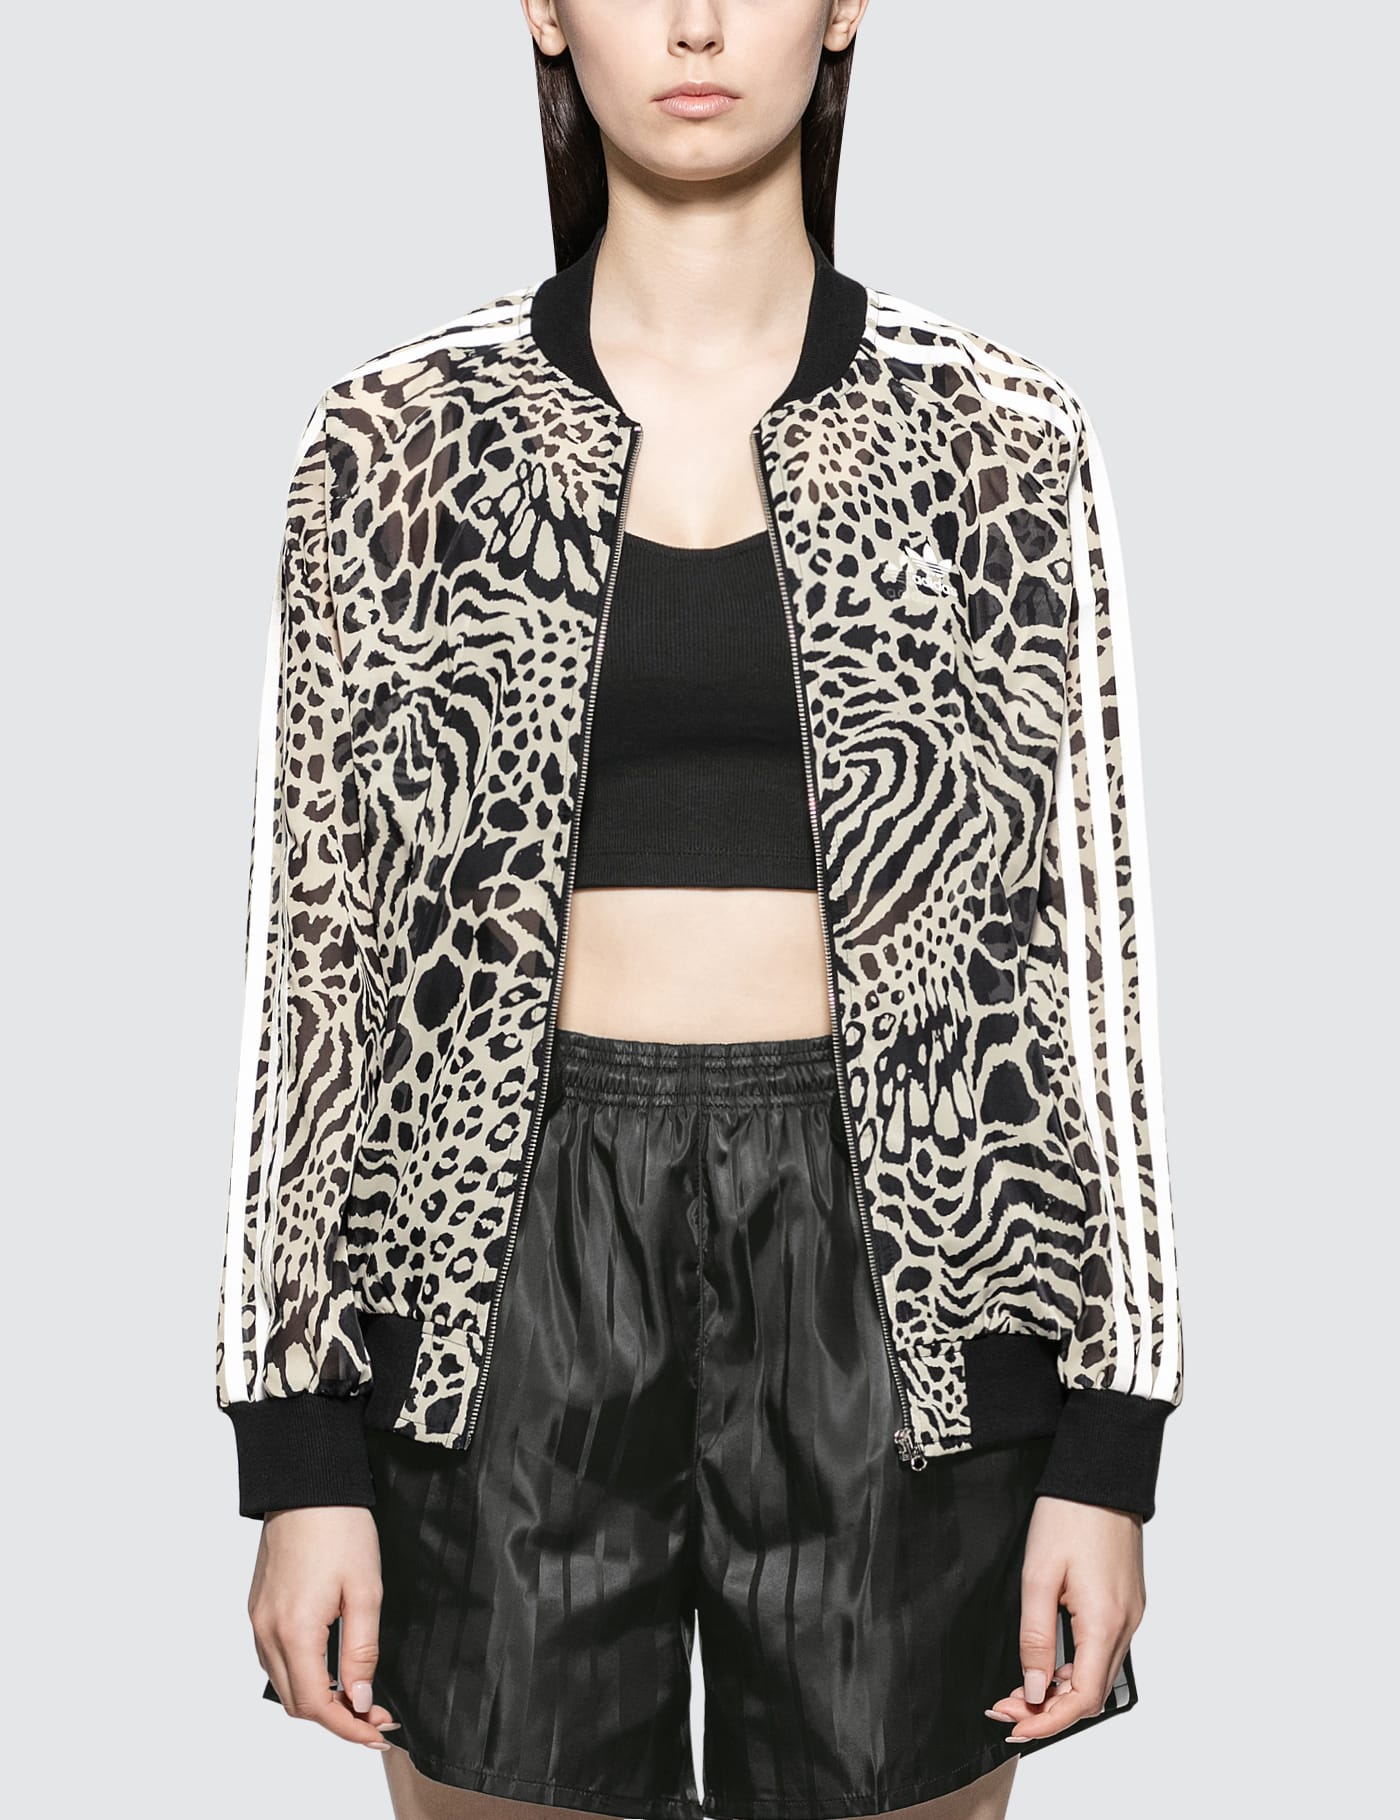 adidas leopard jacket